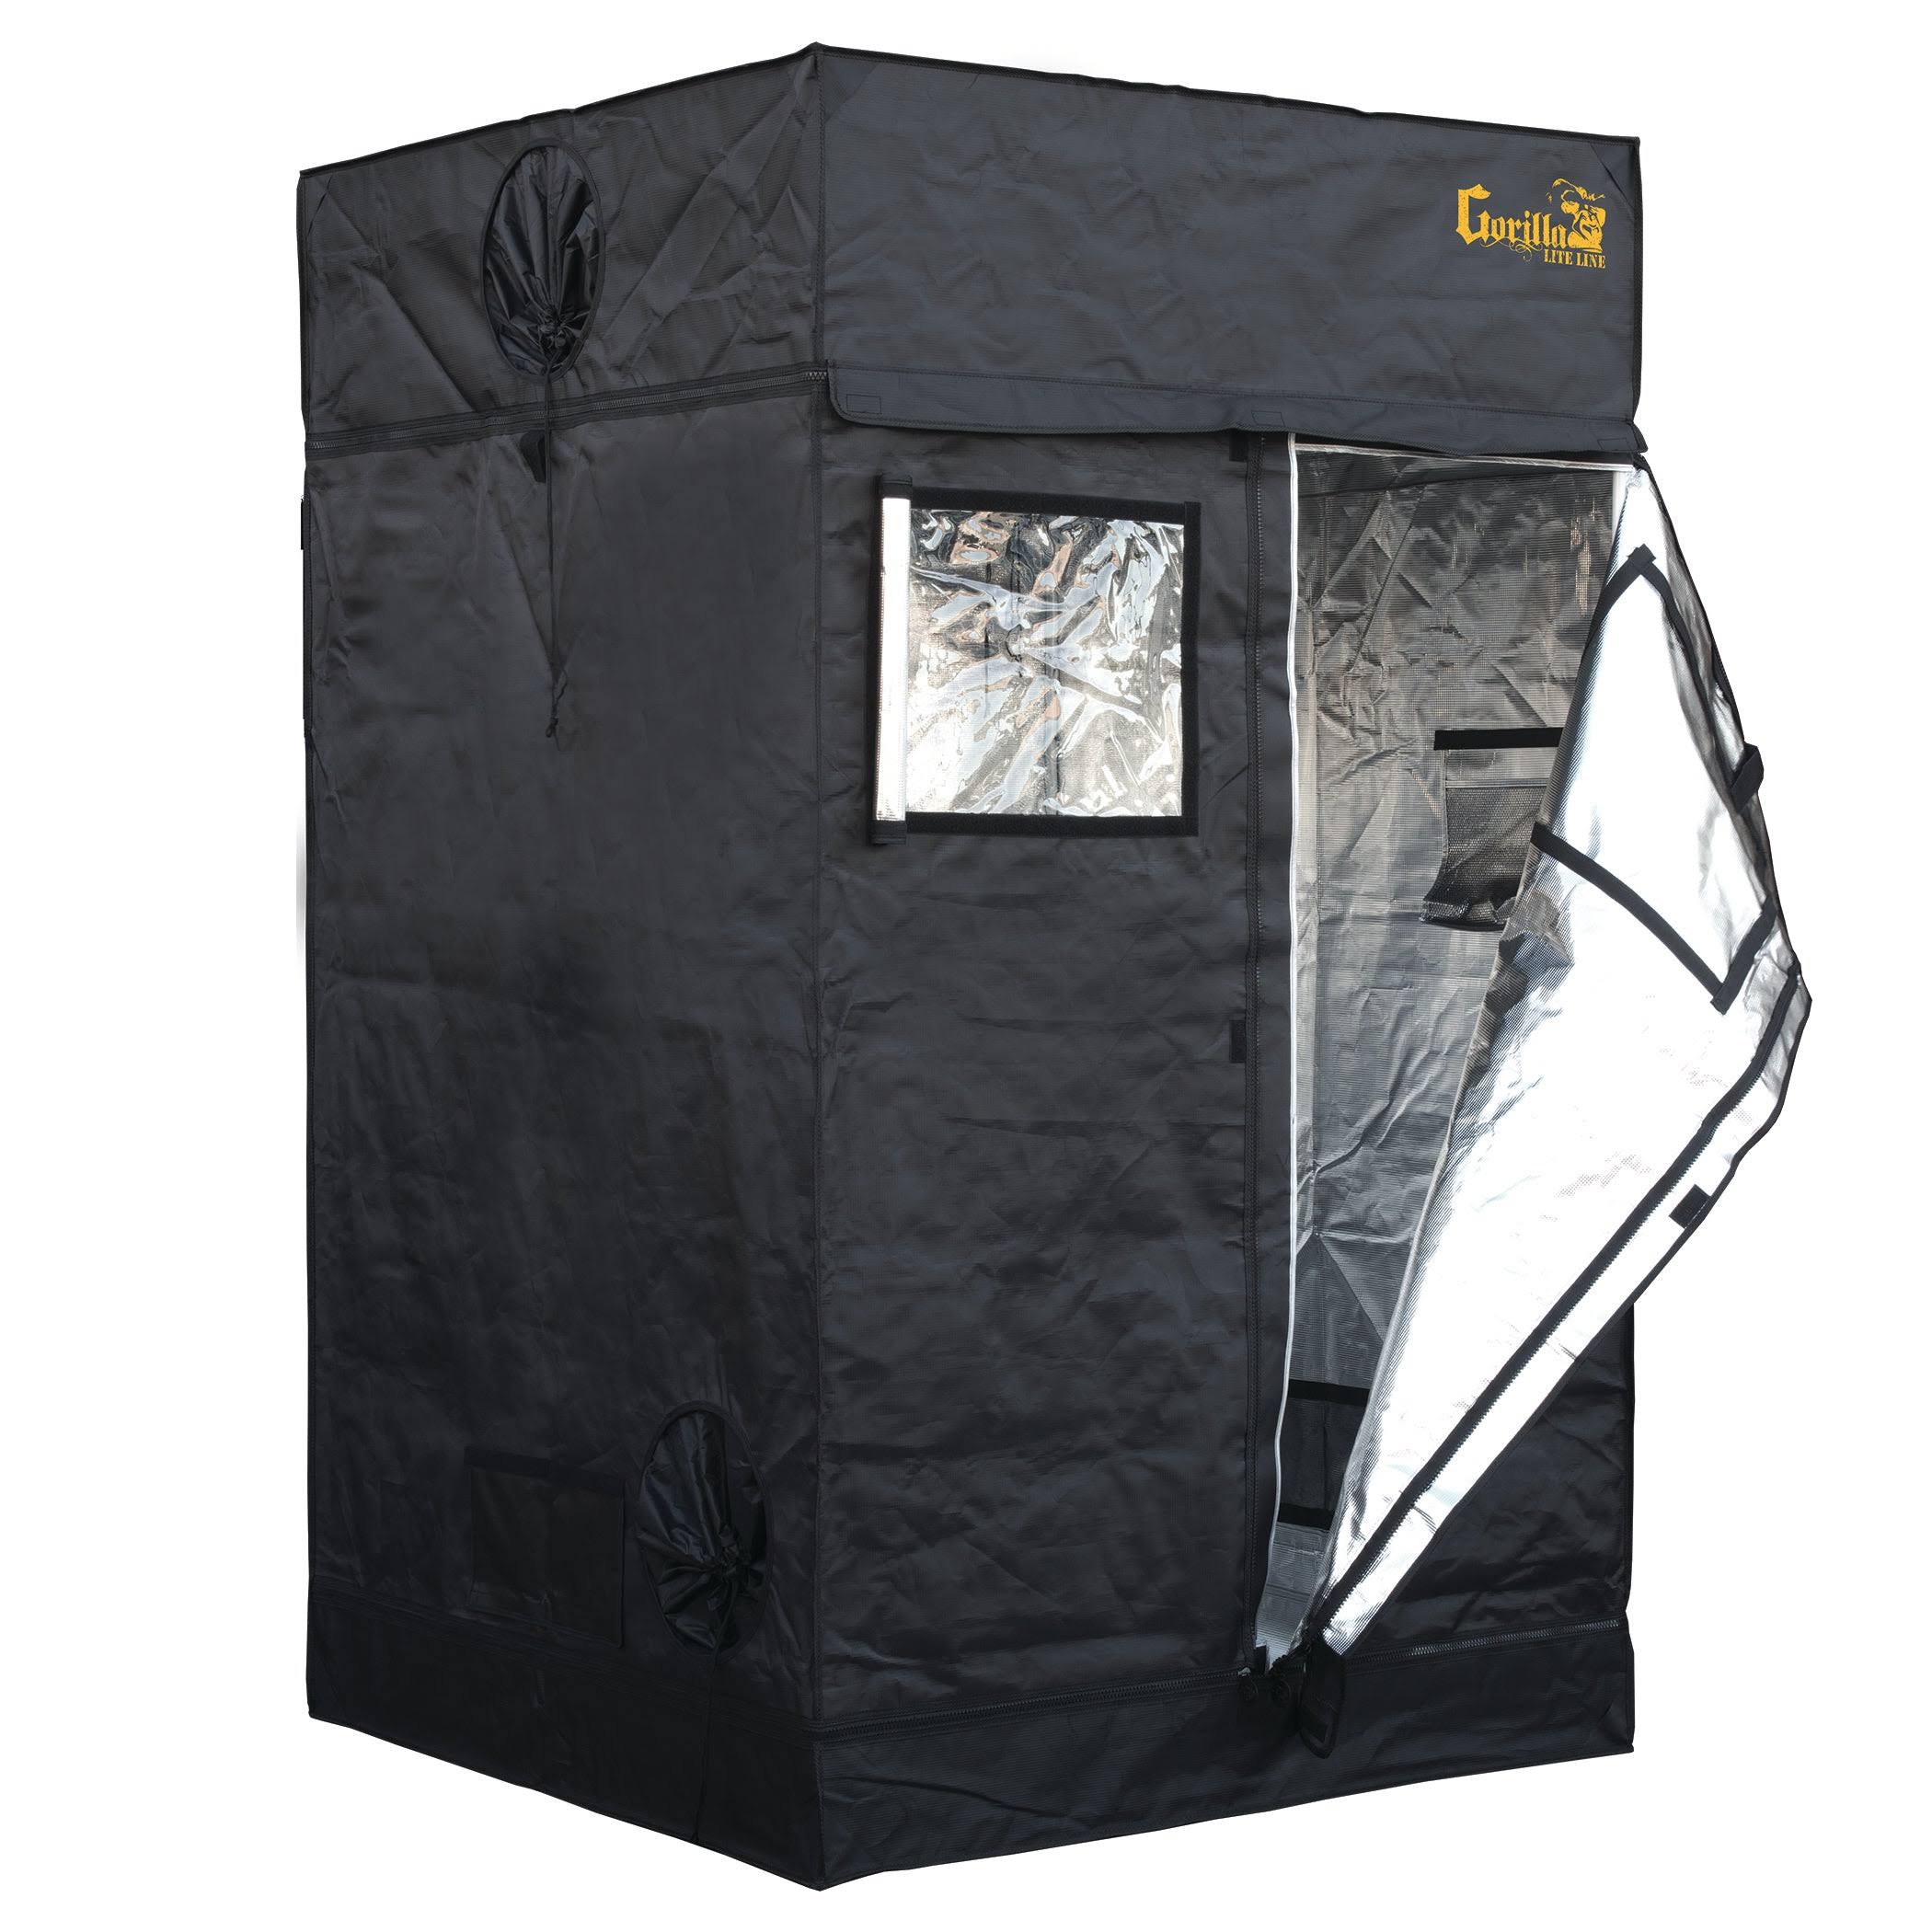 Gorilla Grow Lite Tent - 4' x 4'